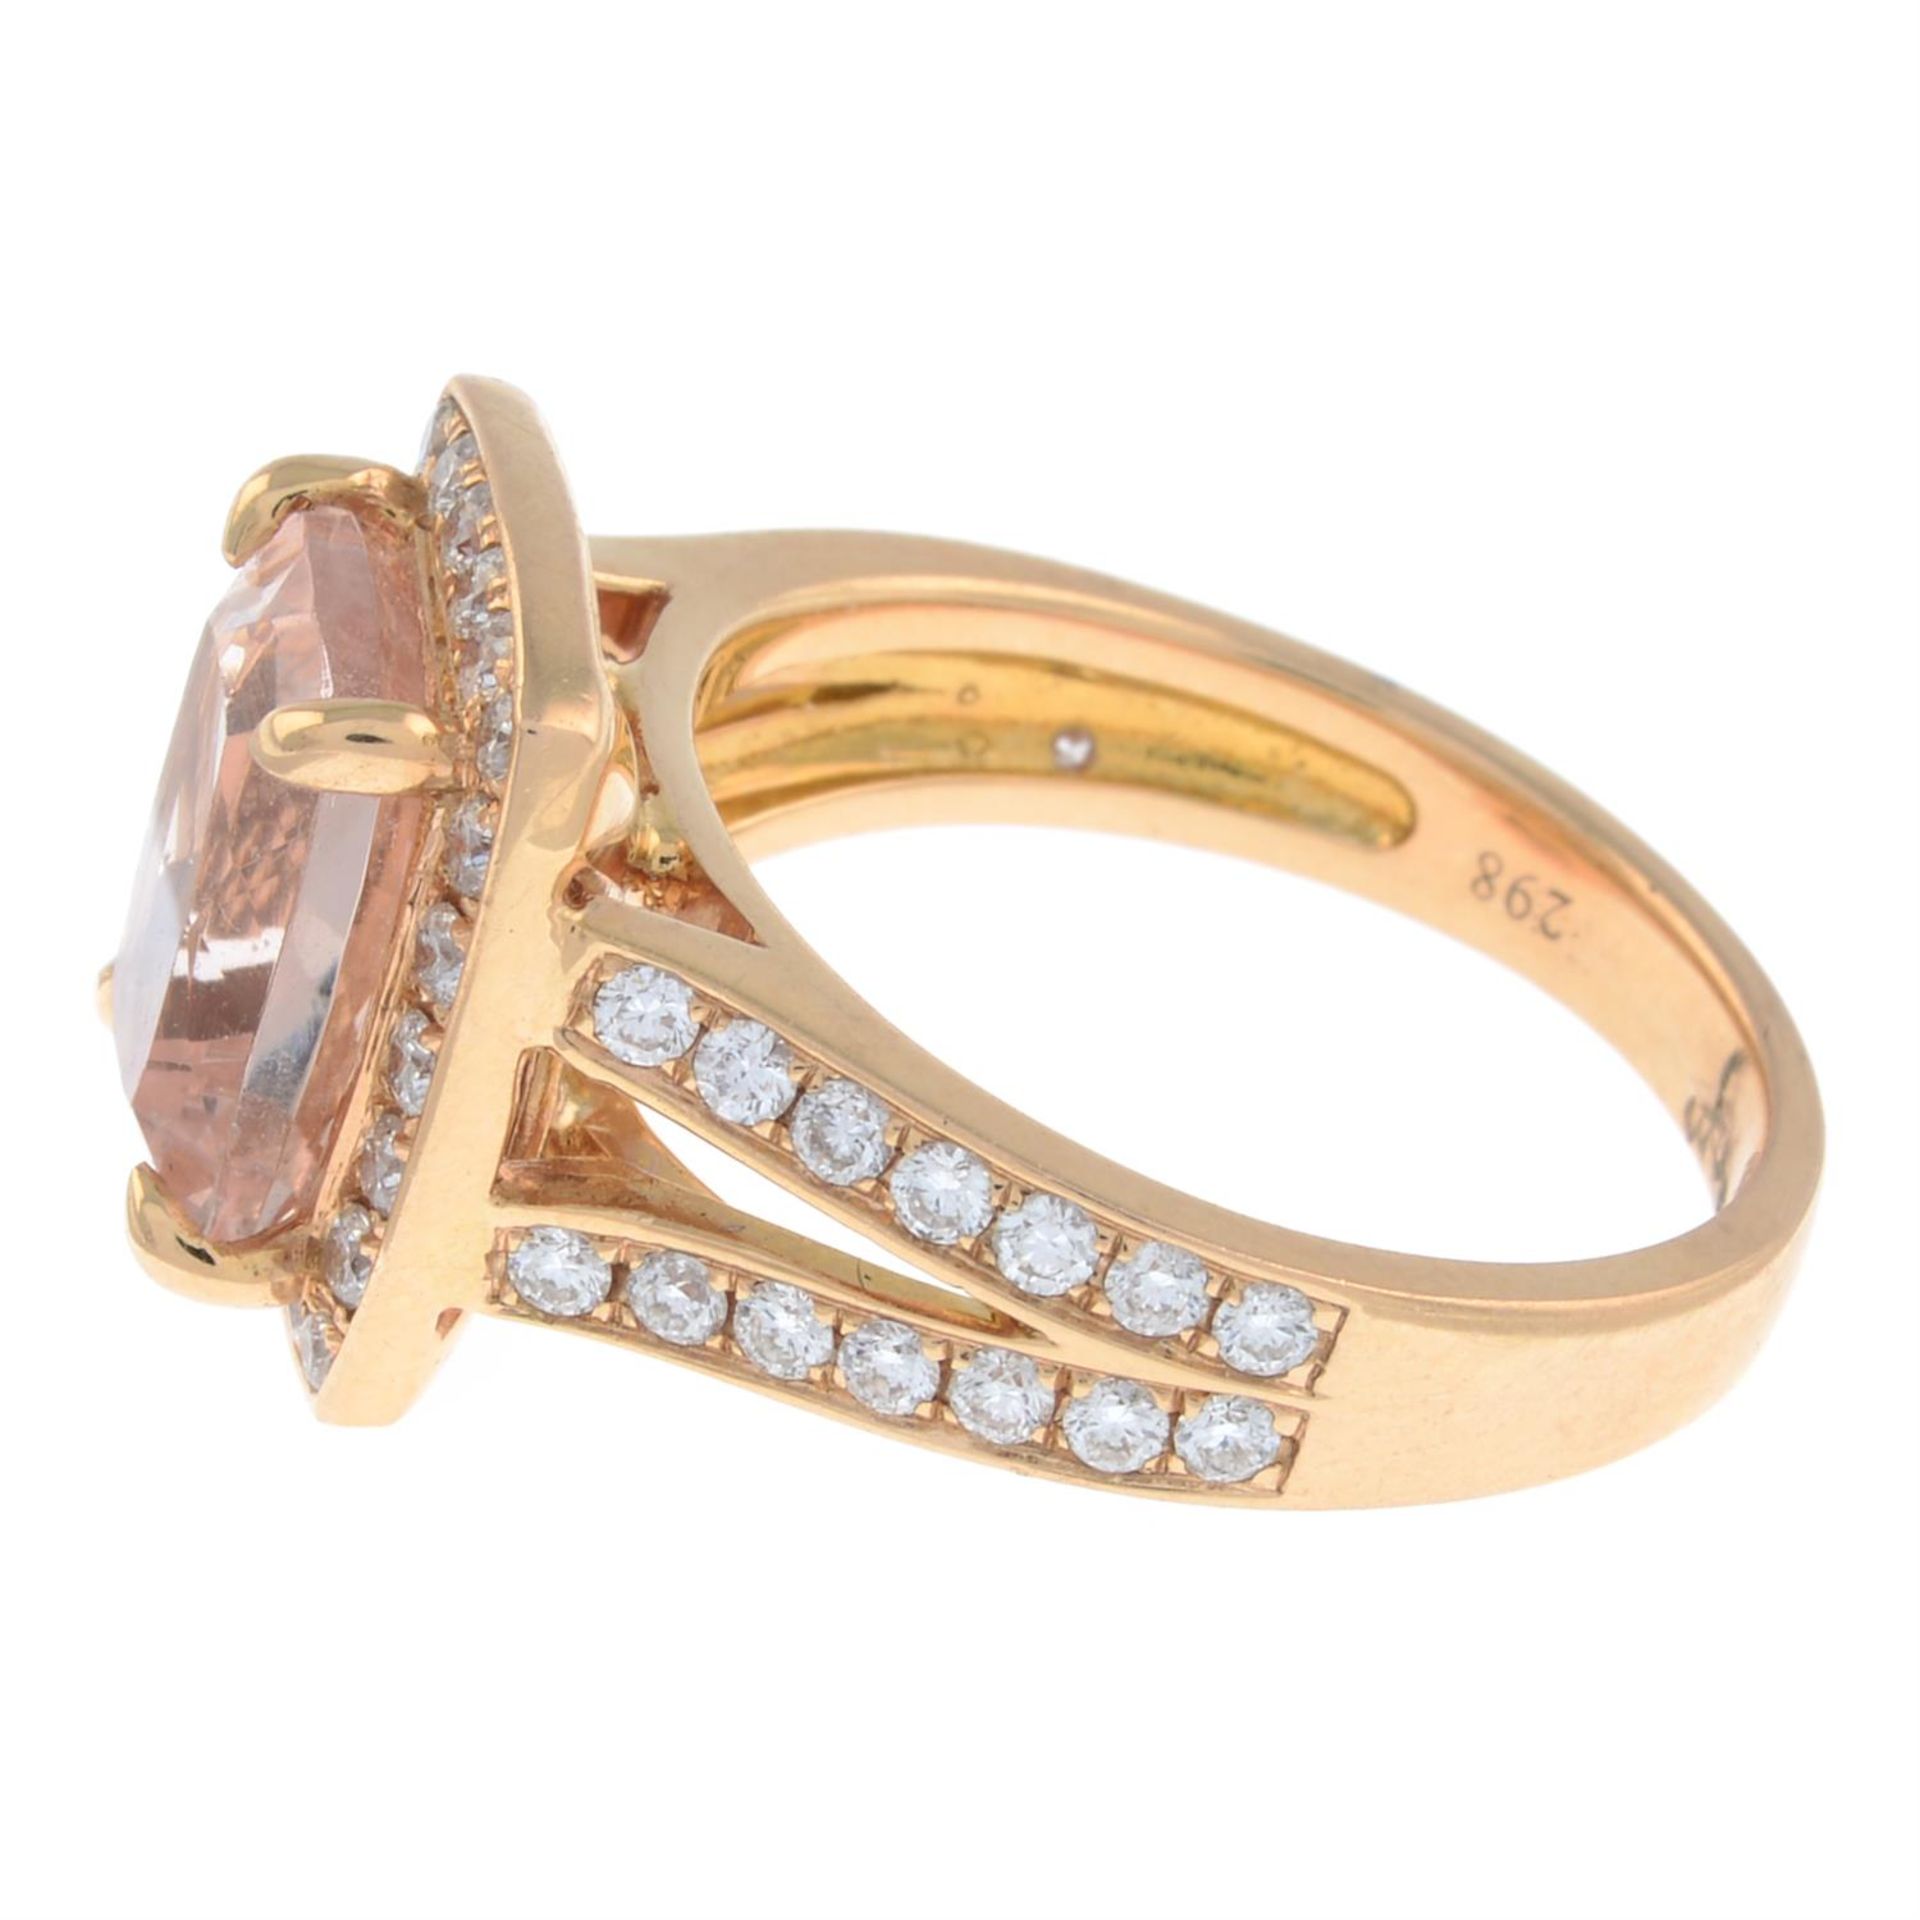 18ct gold morganite and diamond ring - Image 3 of 4